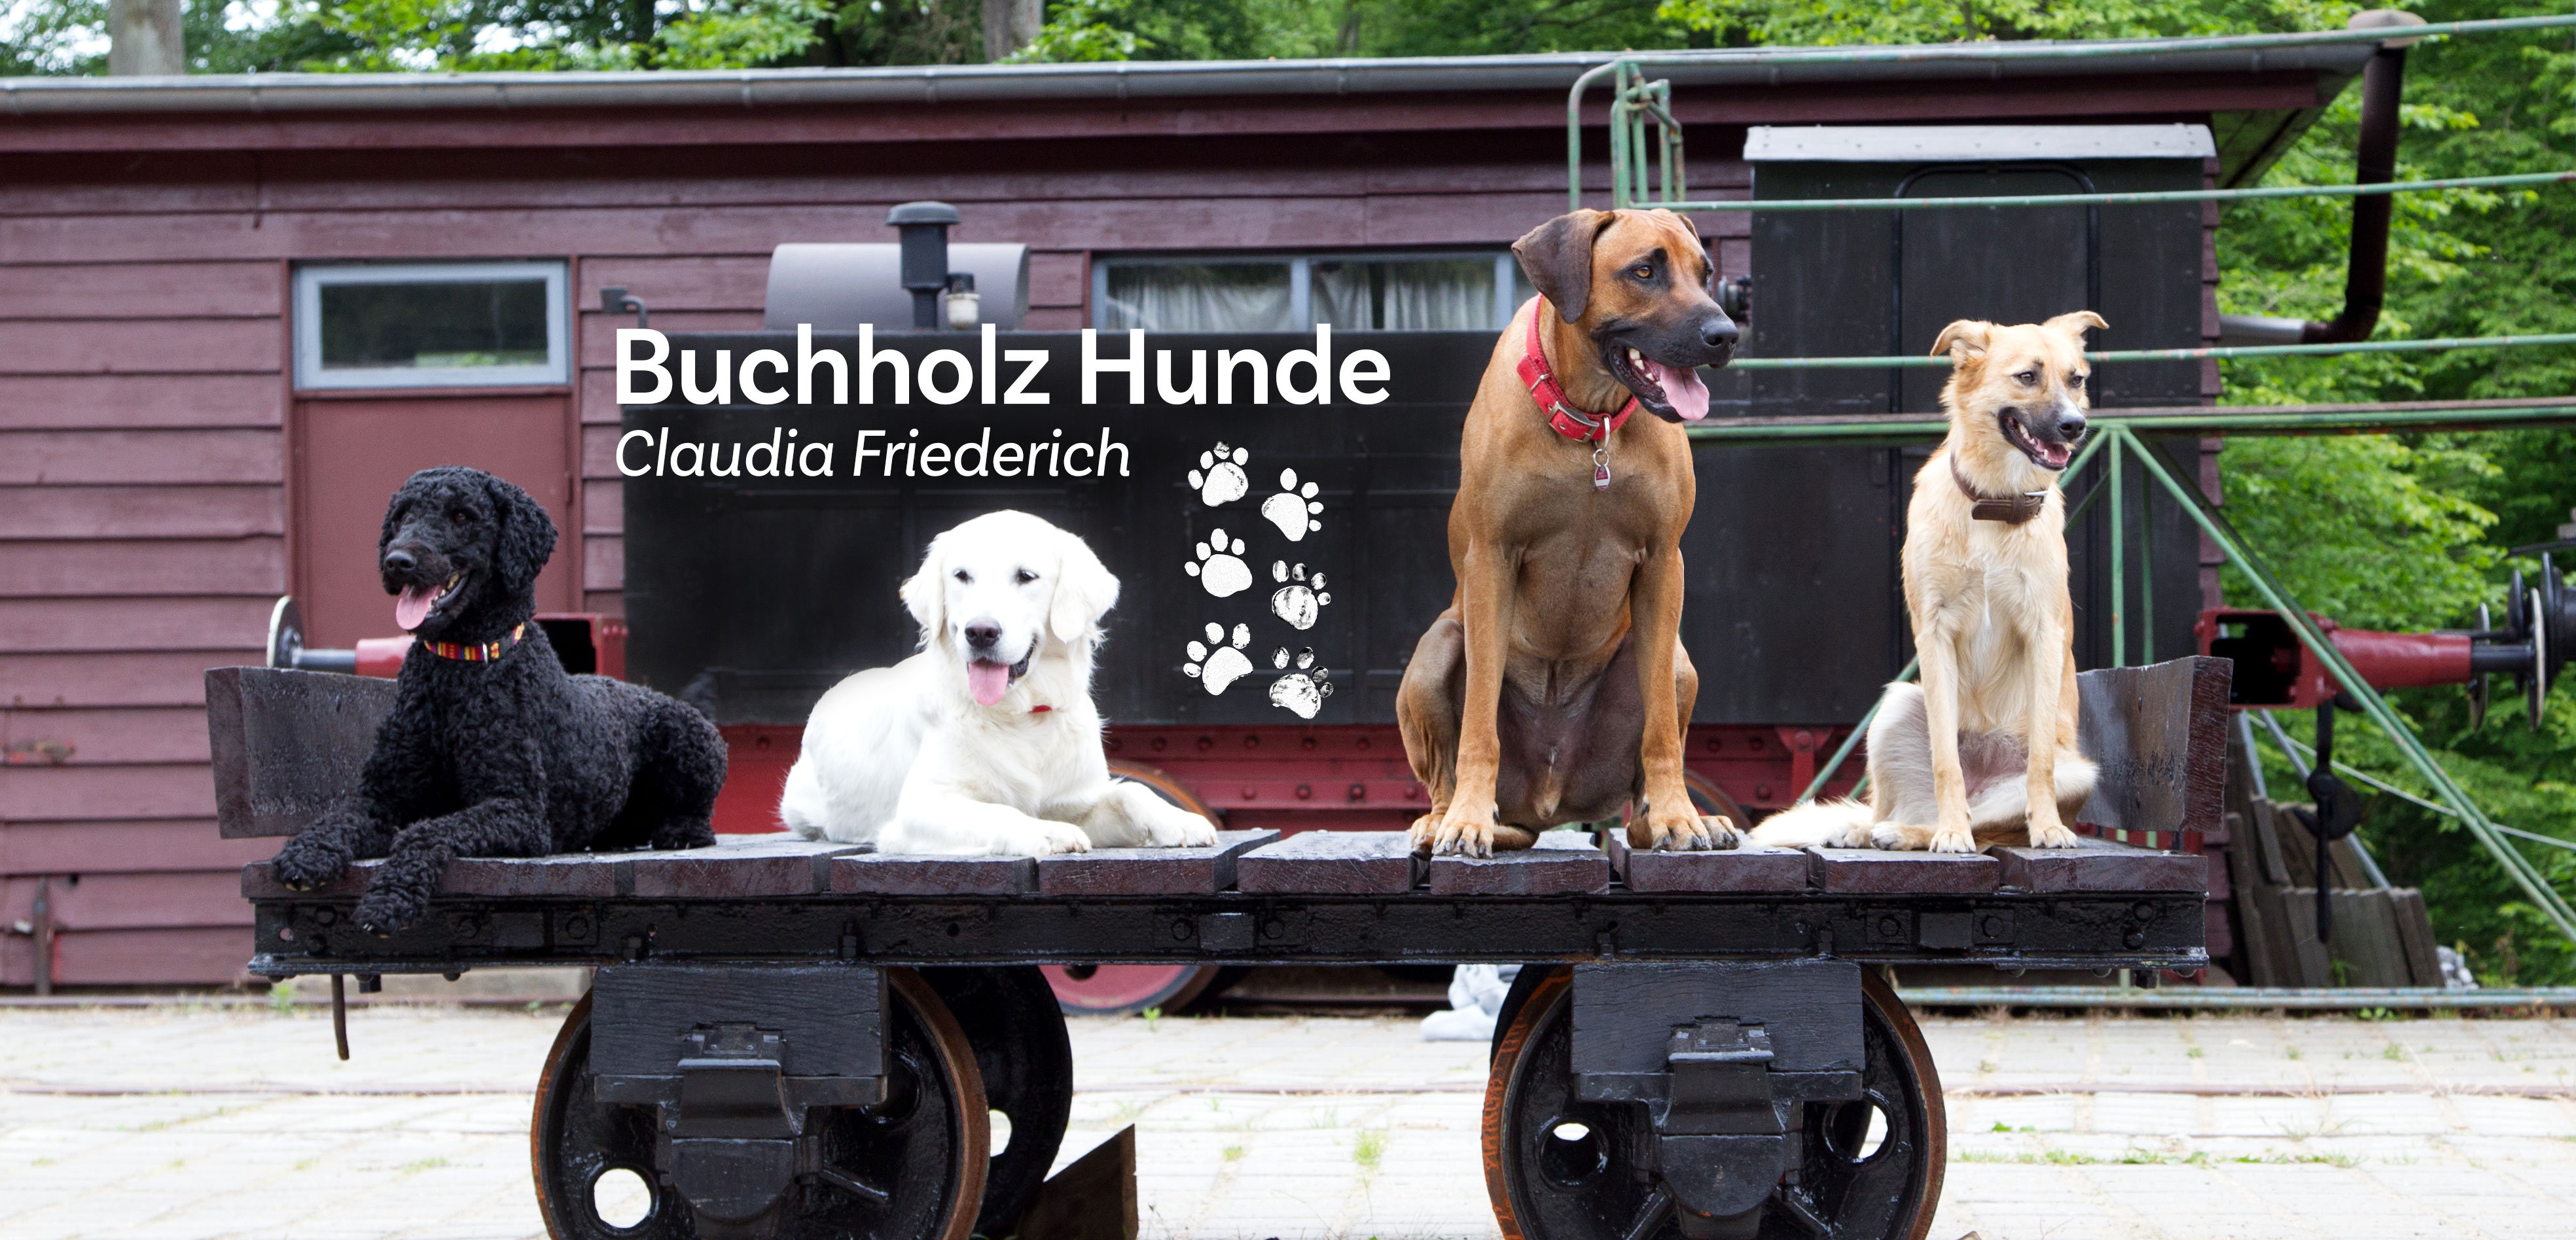 (c) Buchholz-hunde.de